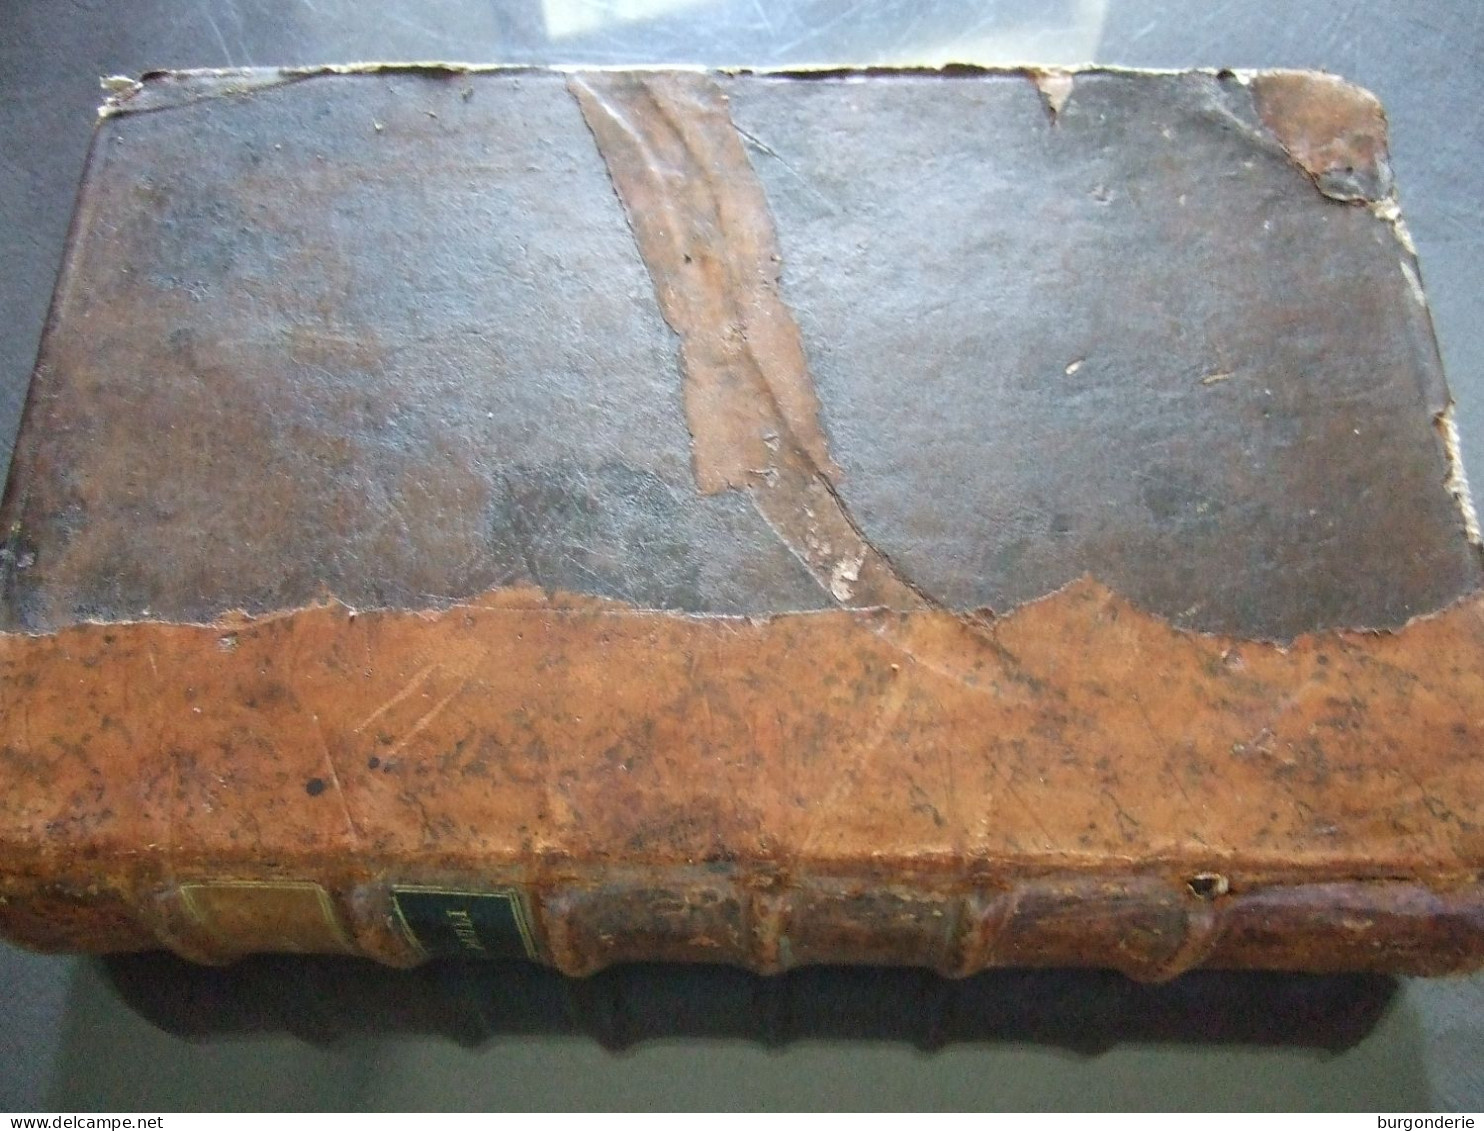 BIBLE / EPIST PAULI DE 1617 - Jusque 1700